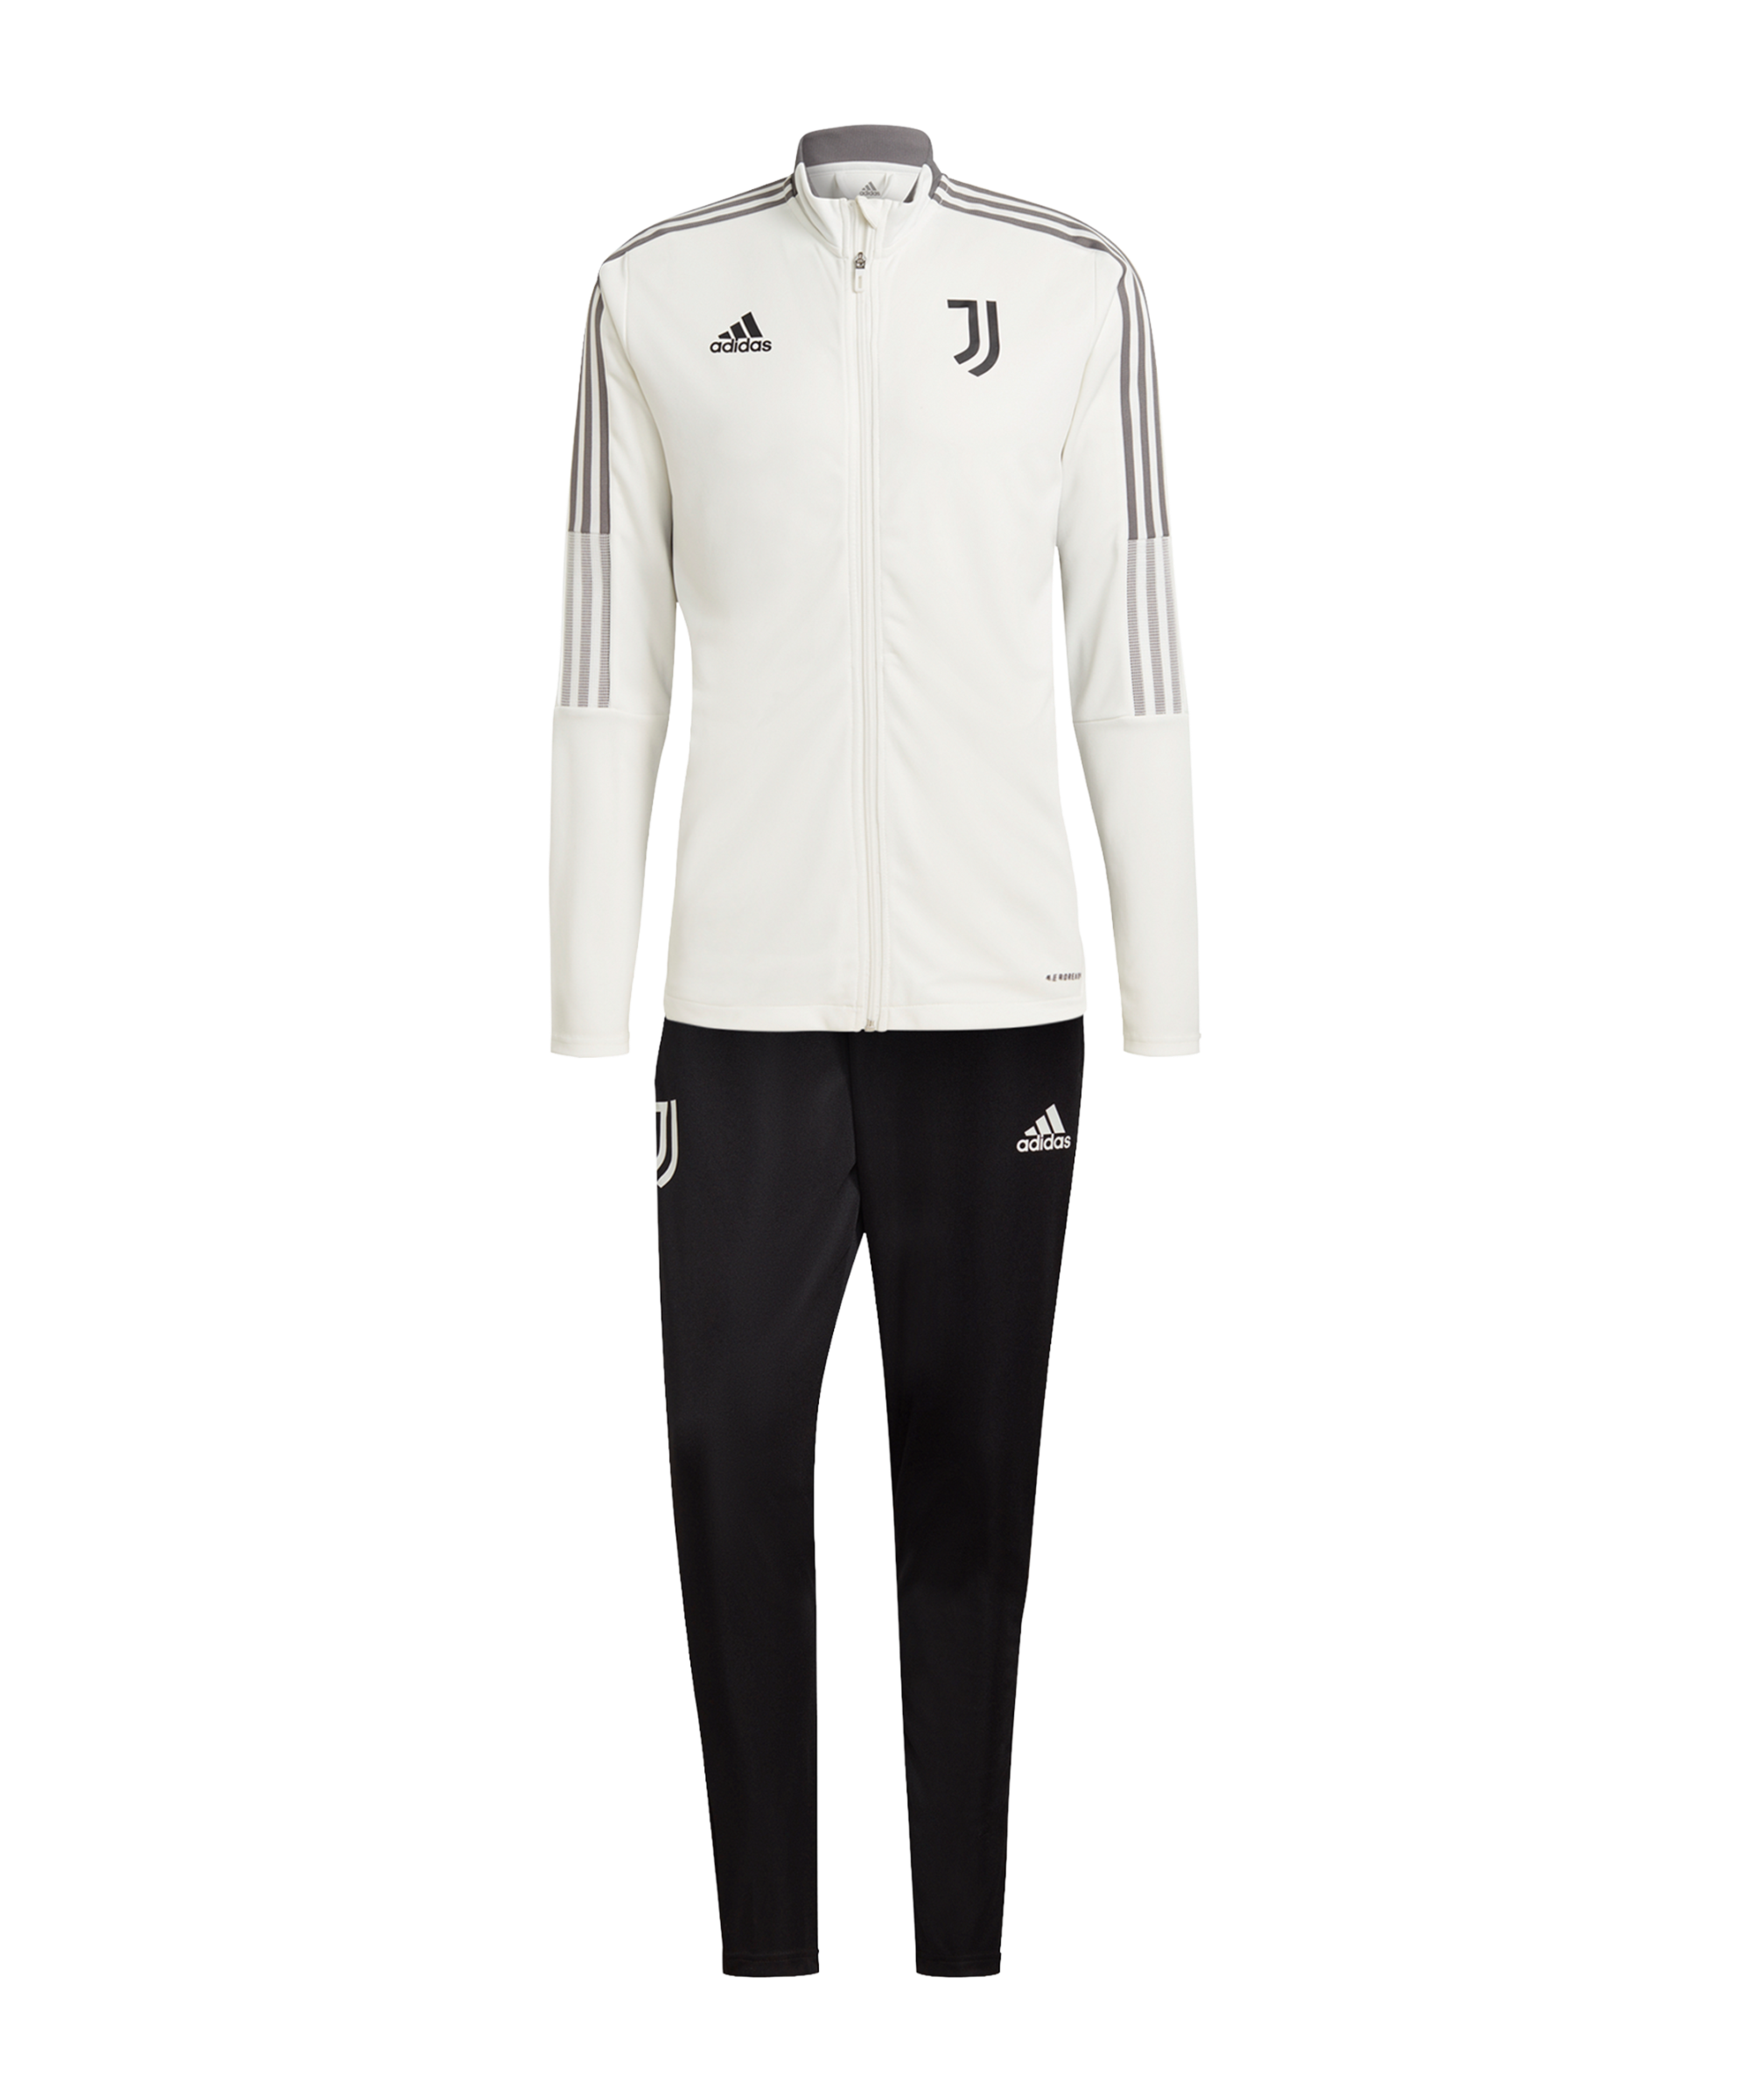 Wapenstilstand Ijveraar bout adidas Juventus Turin Tracksuit - White